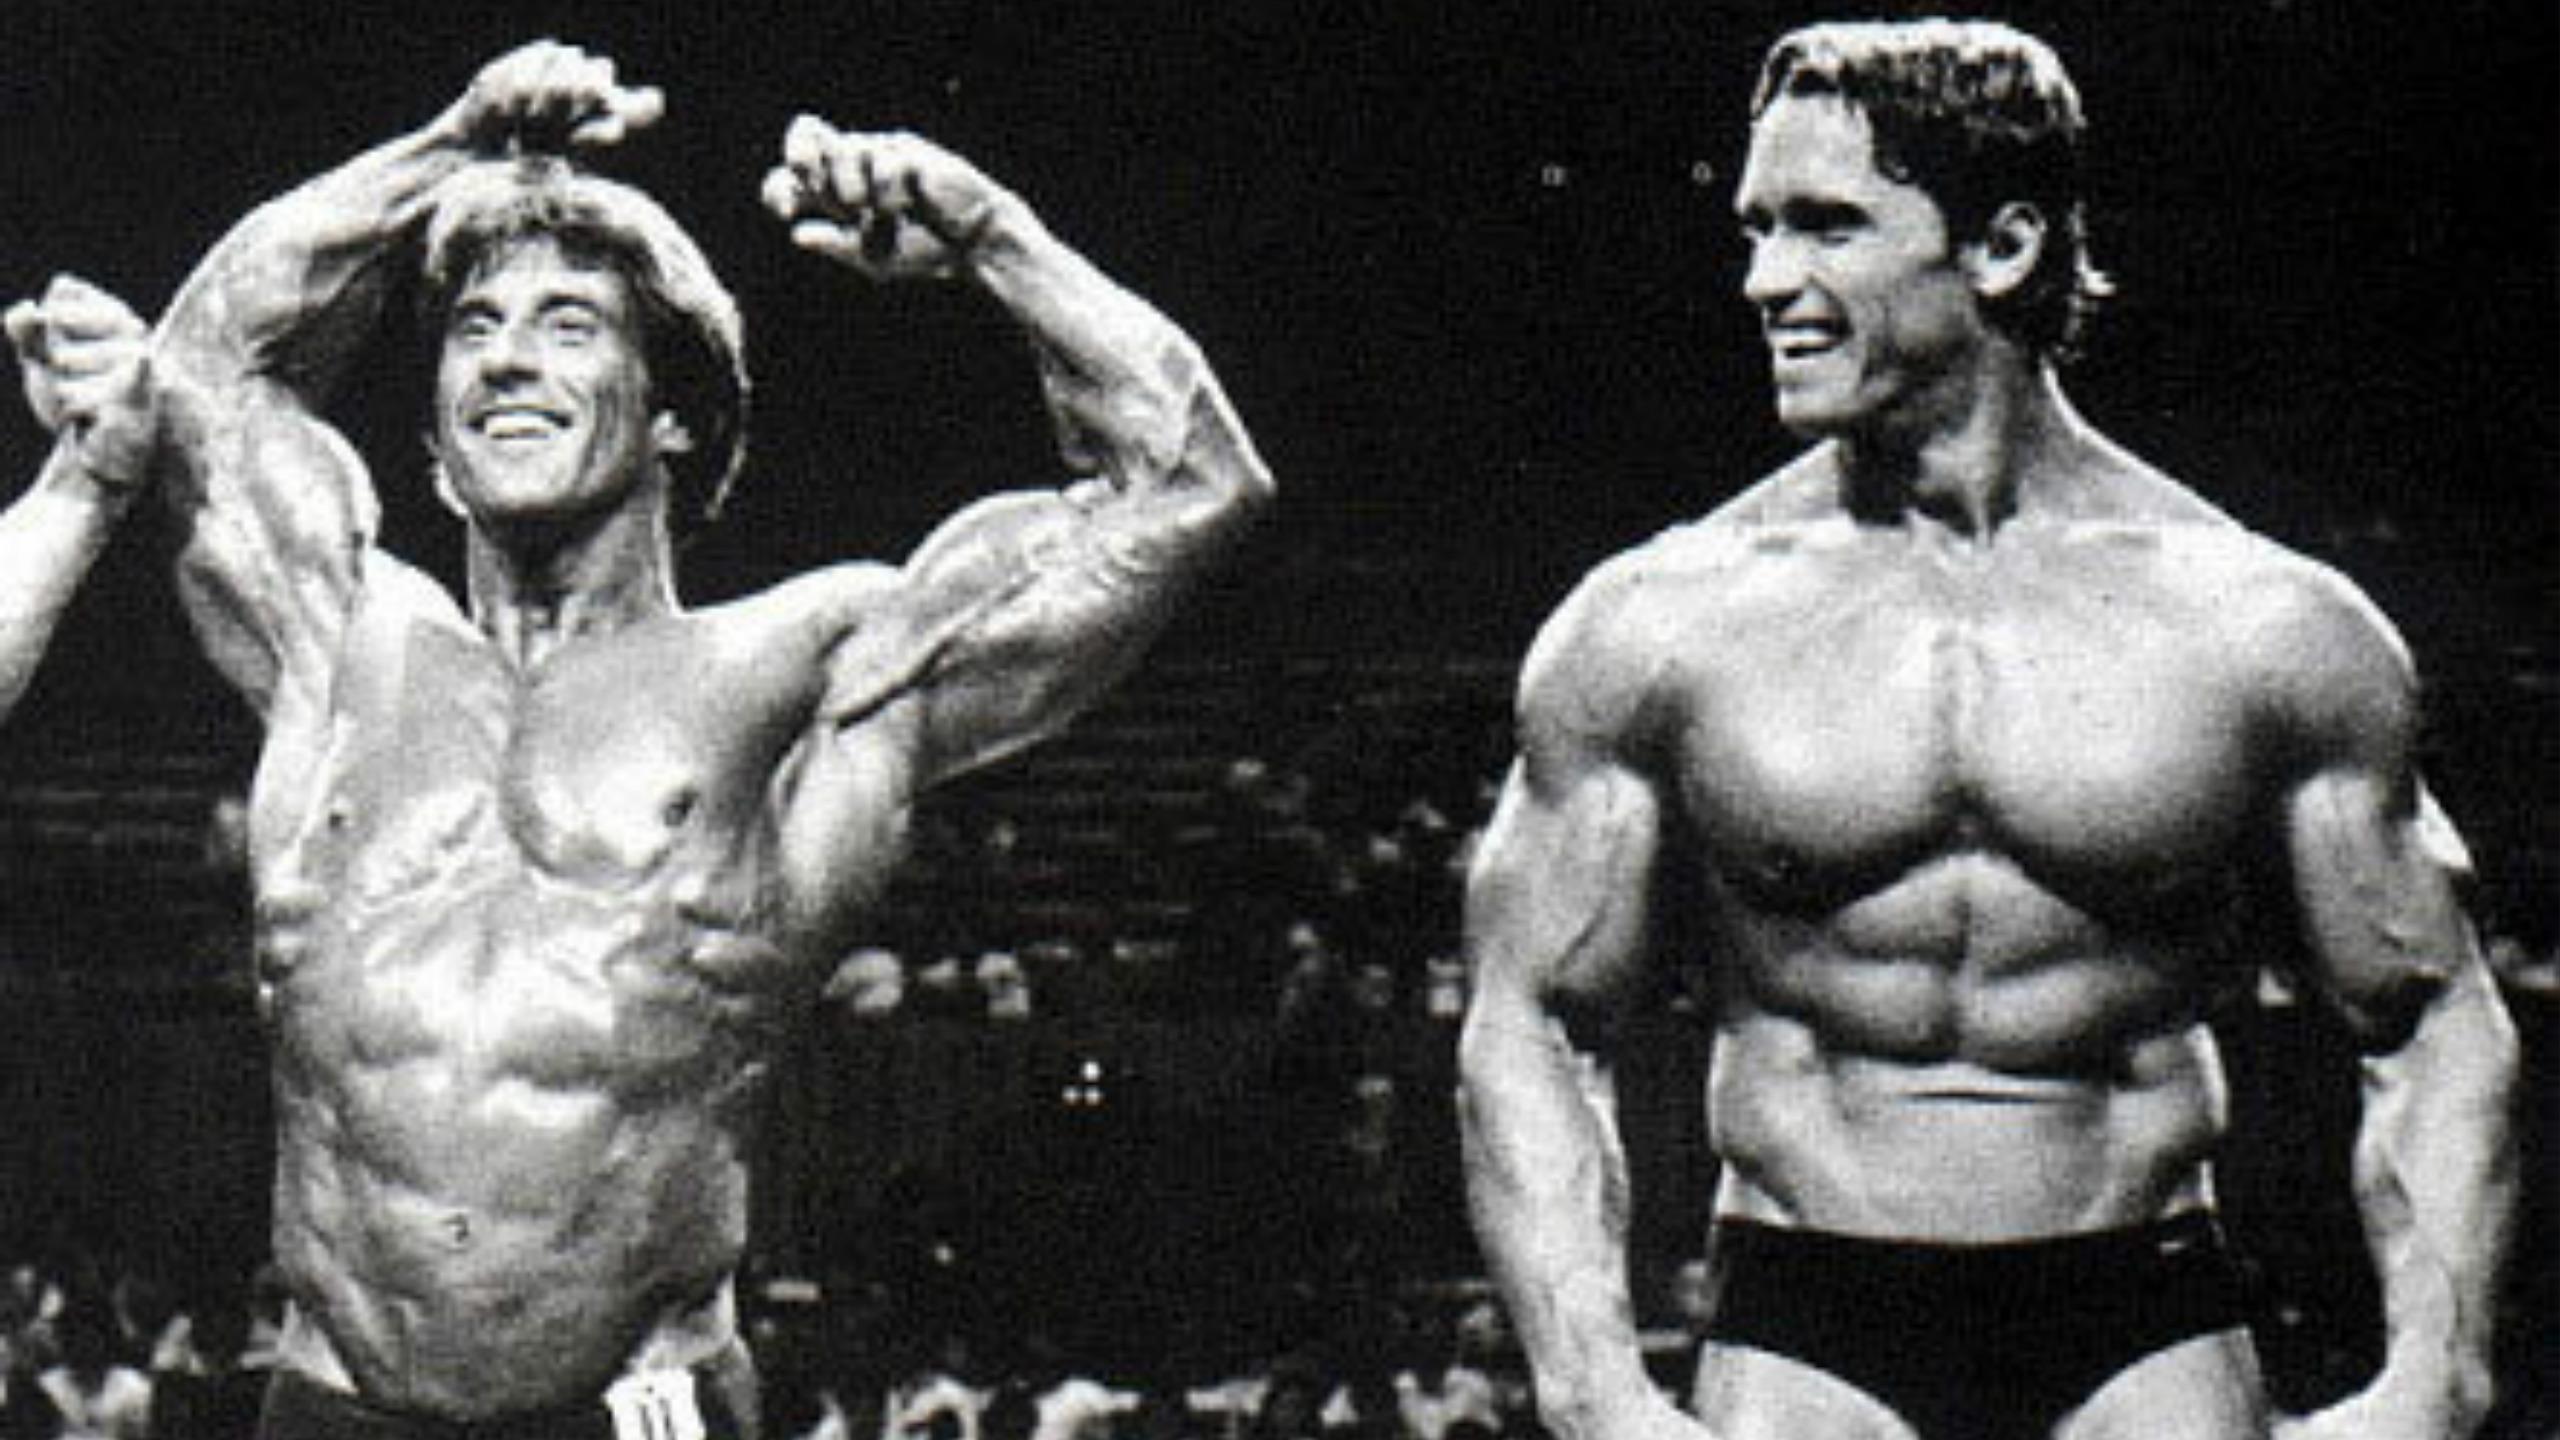 Physical Culture: Frank Zane and Arnold Schwarzenegger